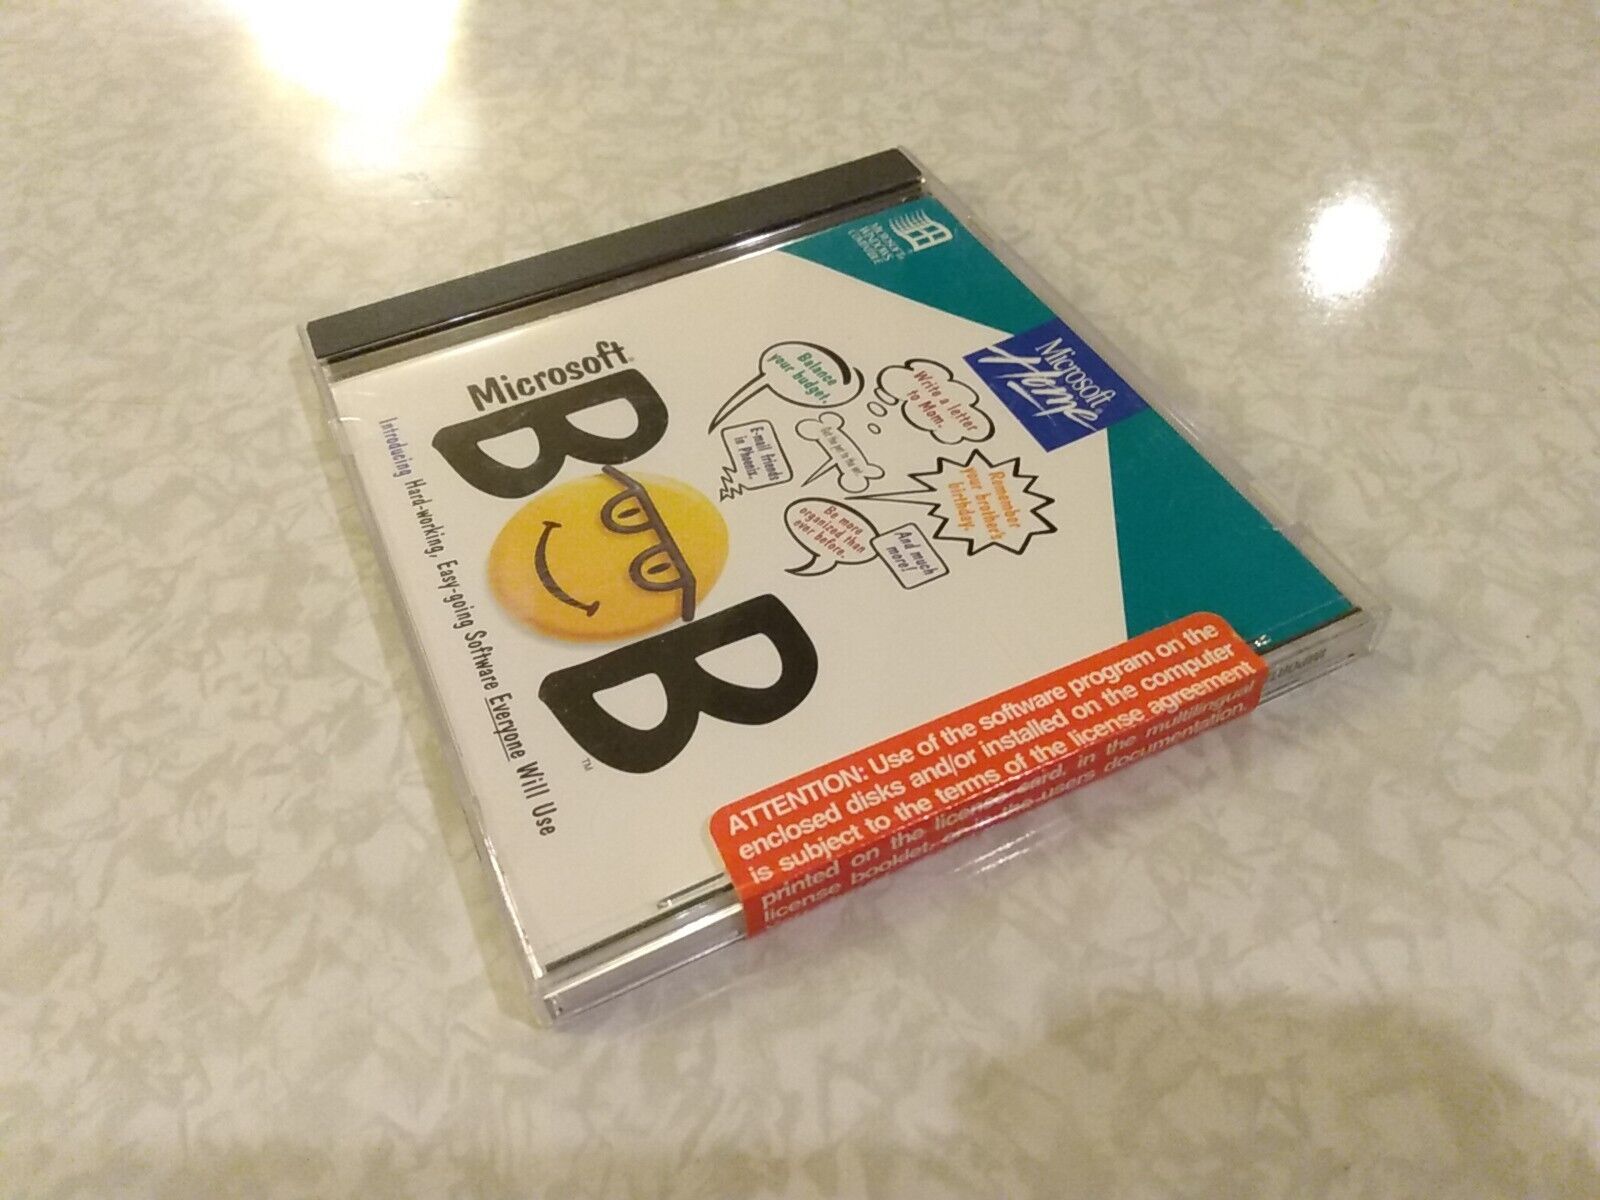 Microsoft Bob Software for Windows CD SEALED, UNOPENED Comic Sans 